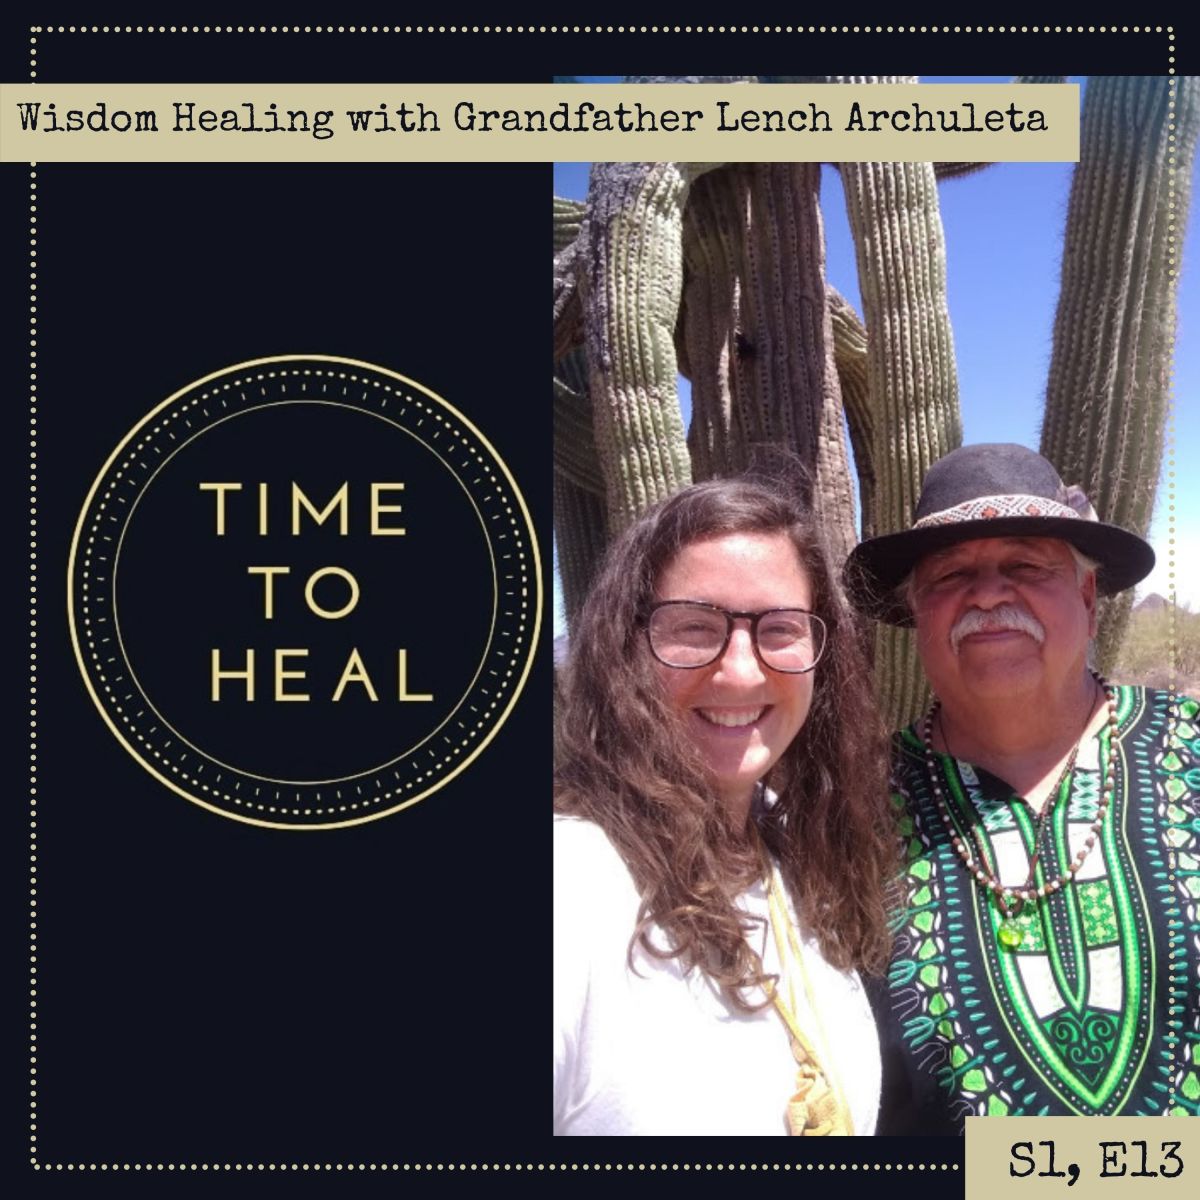 Wisdom Healing with Grandfather Lench Archuleta